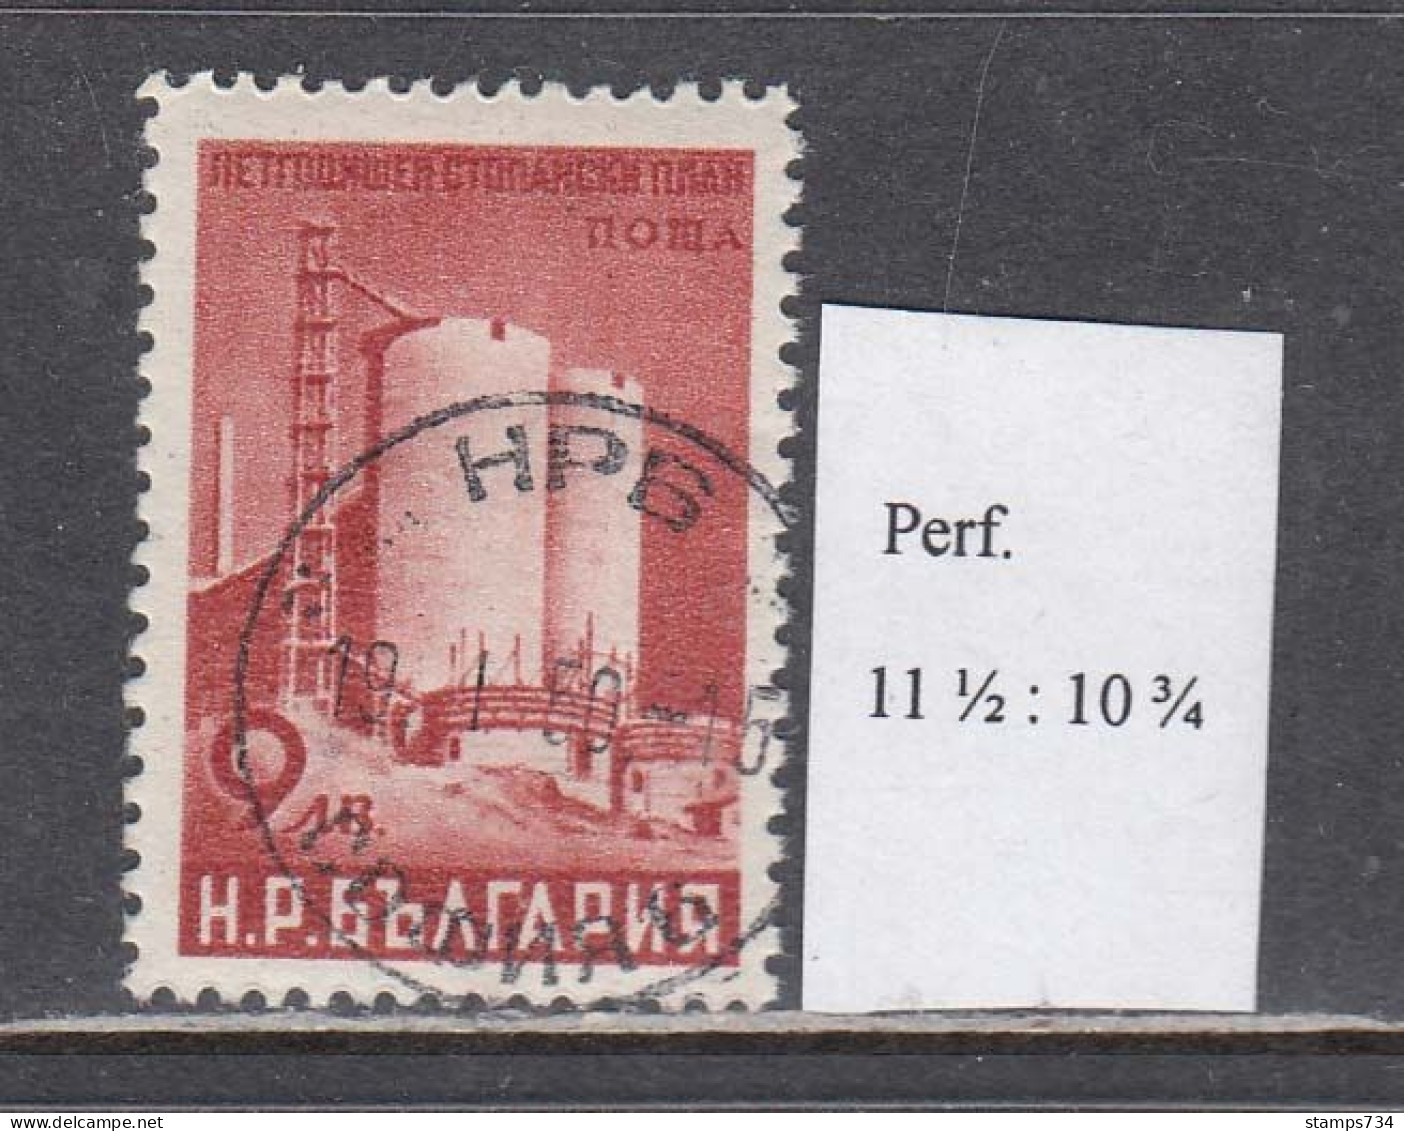 Bulgaria 1949 - Five-year Plan Of The Economy, Mi-Nr. 700, Rare Preforation 11 1/2: 10 3/4, Used - Gebruikt